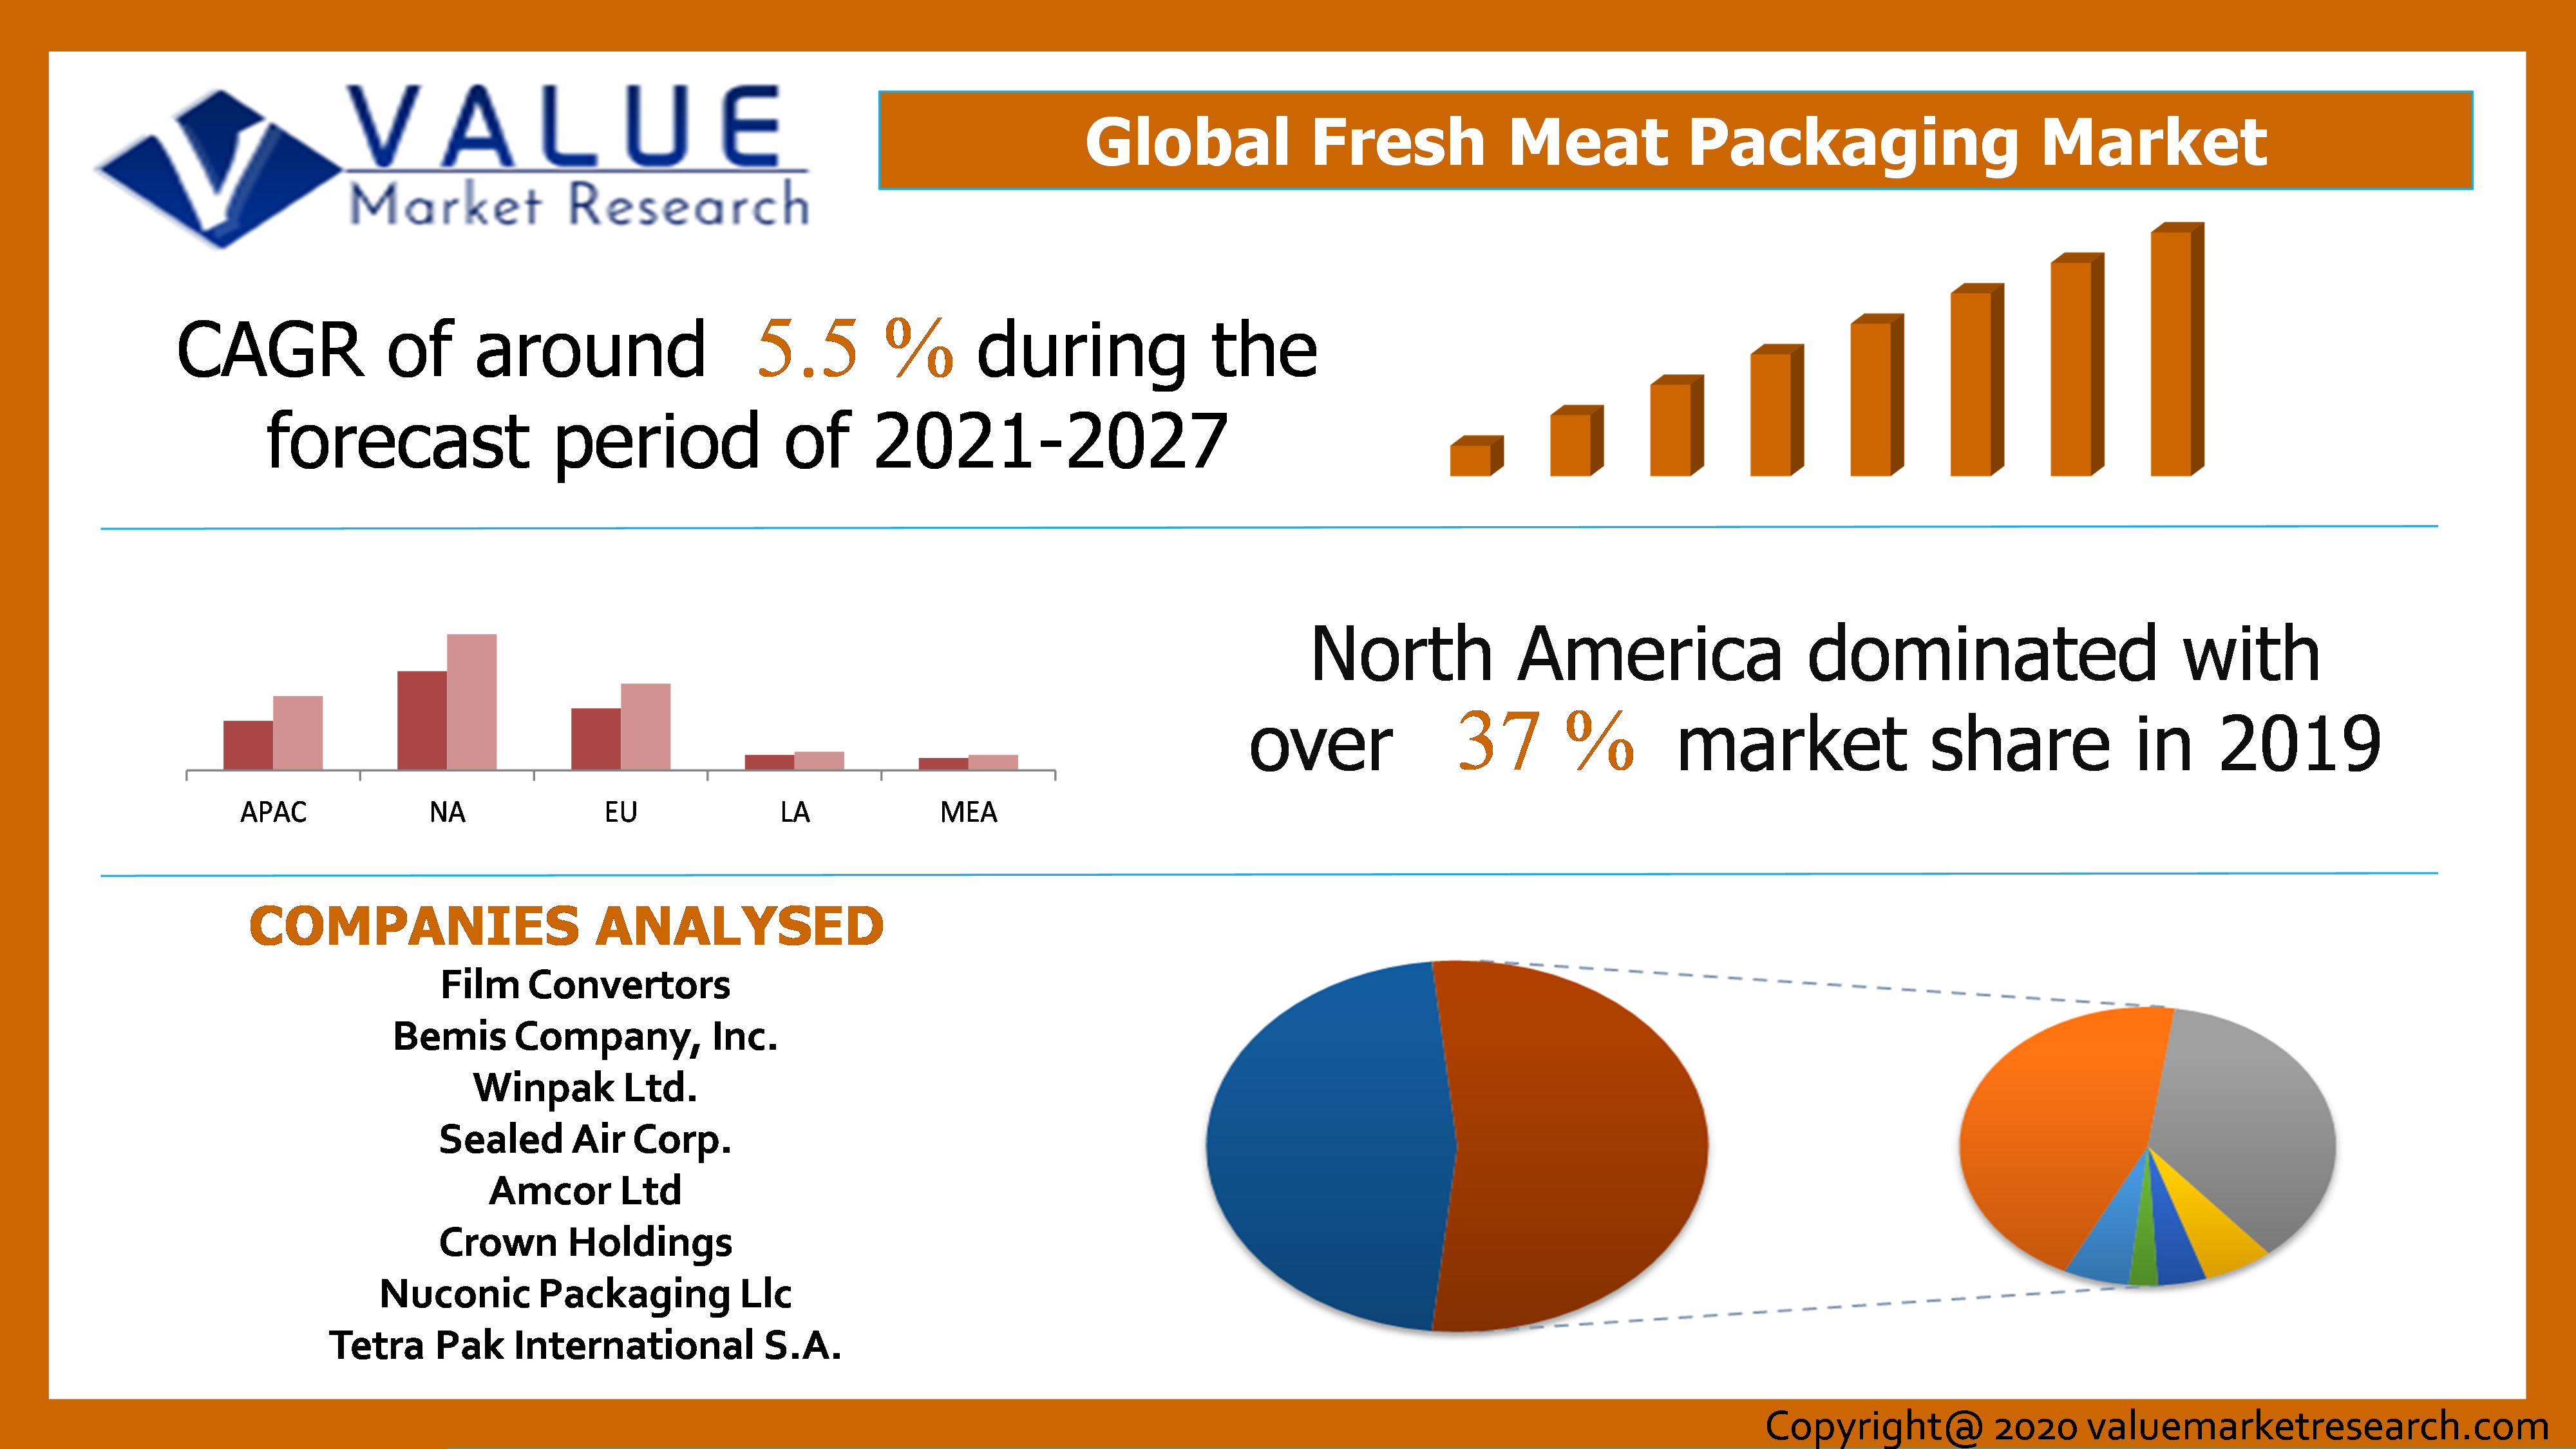 Global Fresh Meat Packaging Market Share